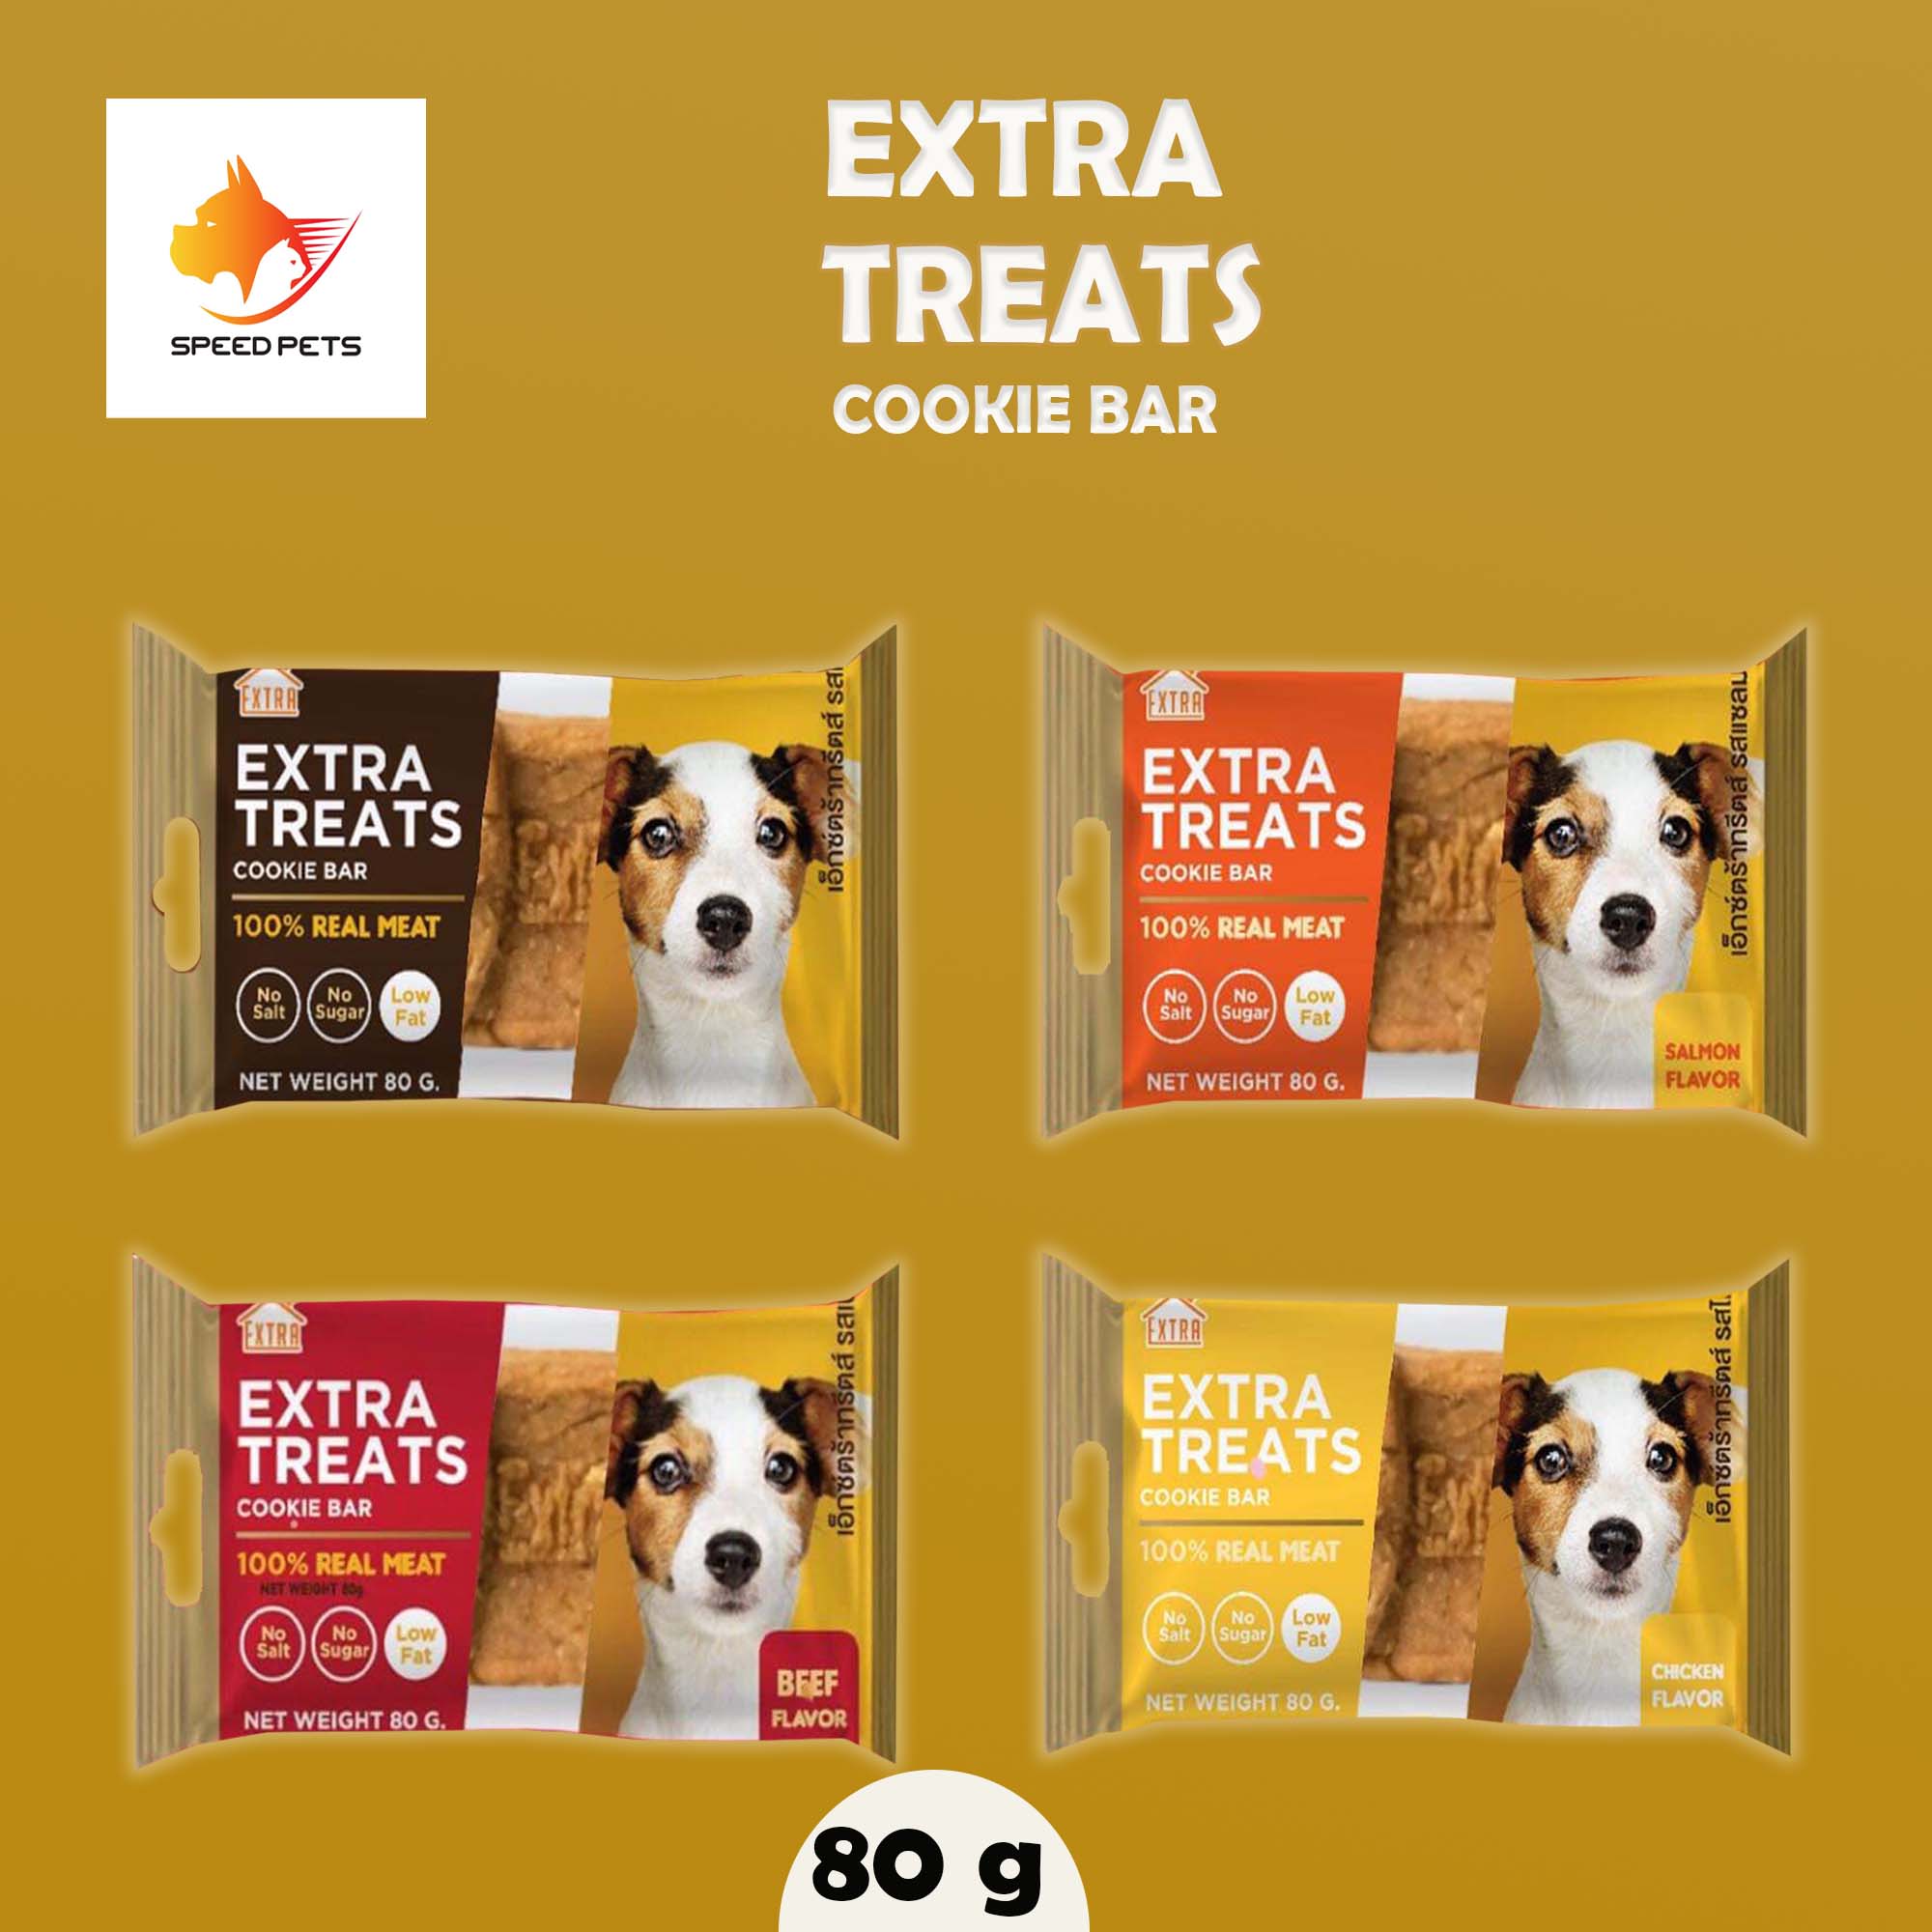 EXTRA TREATS COOKIE BAR เอ็กซ์ตร้าทรีตส์ คุกกี้สุนัข ไม่เติมเกลือและน้ำตาล ดีต่อสุขภาพไตและสุขภาพสุนัข บำรุงเลือด 80กรัม